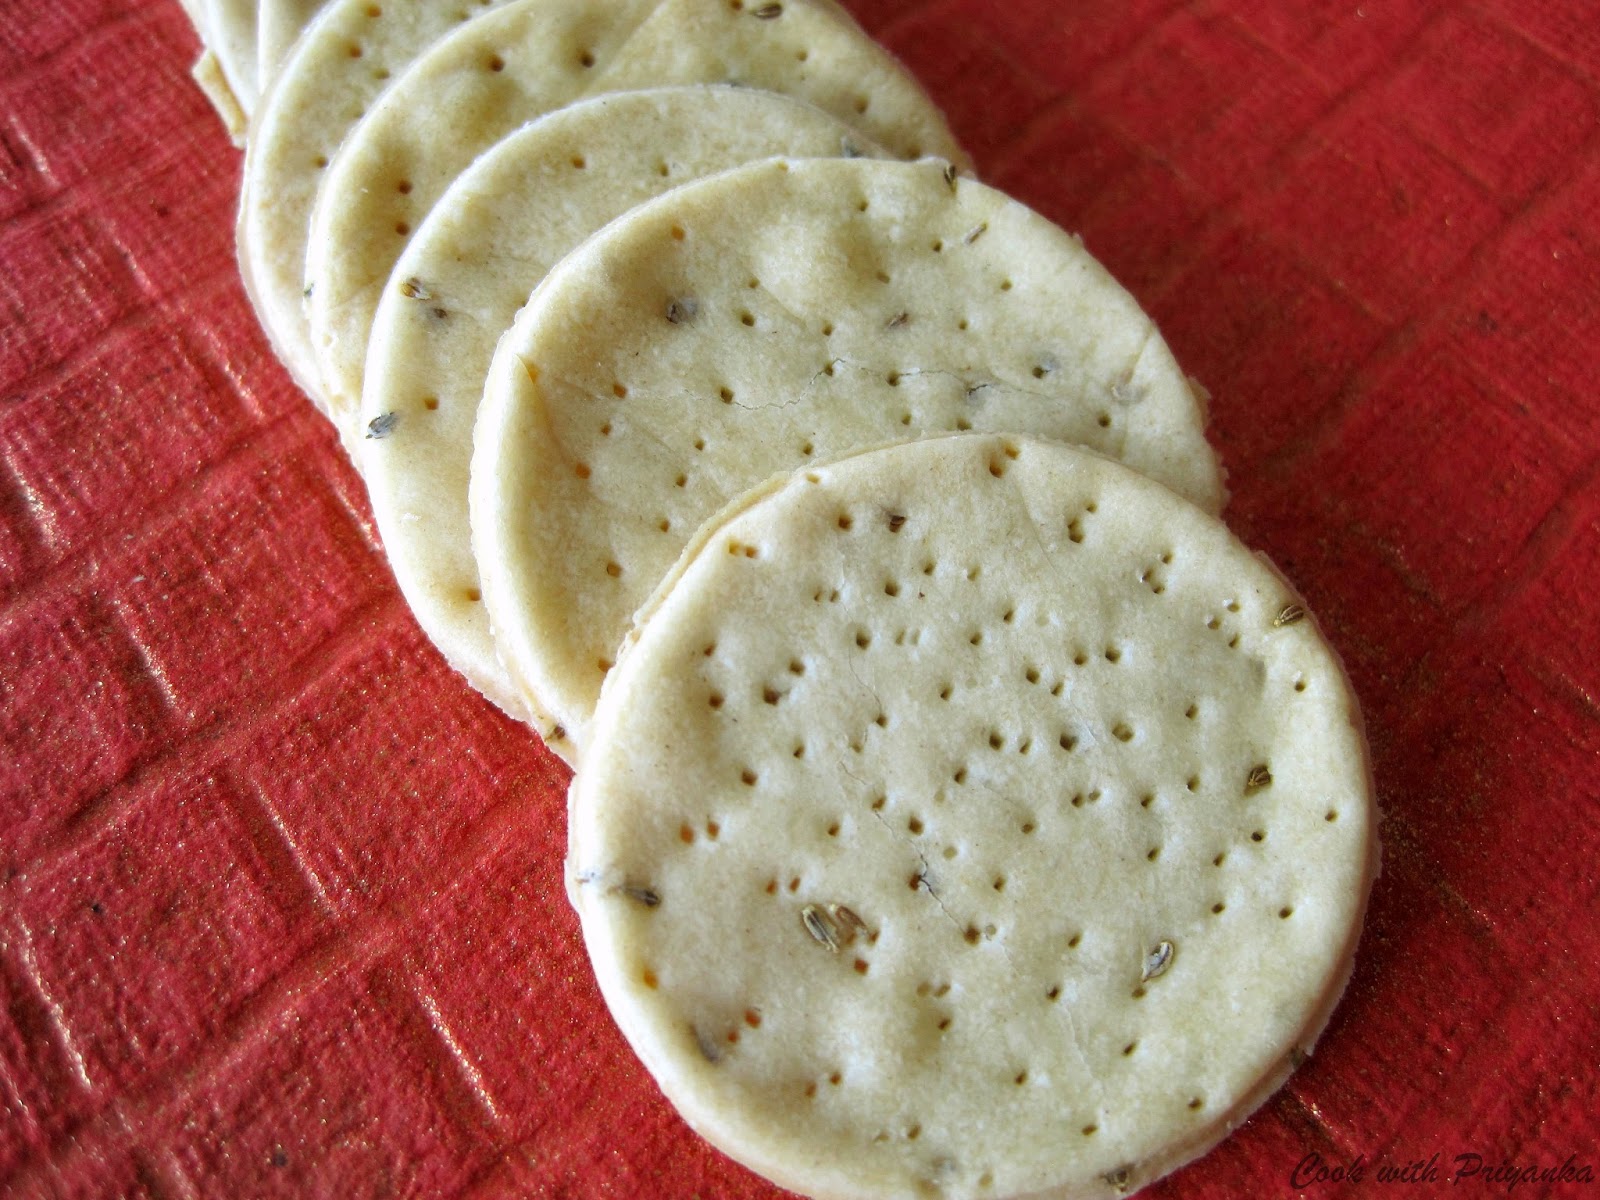 http://cookwithpriyankavarma.blogspot.co.uk/2014/05/baked-papadibaked-crackers.html